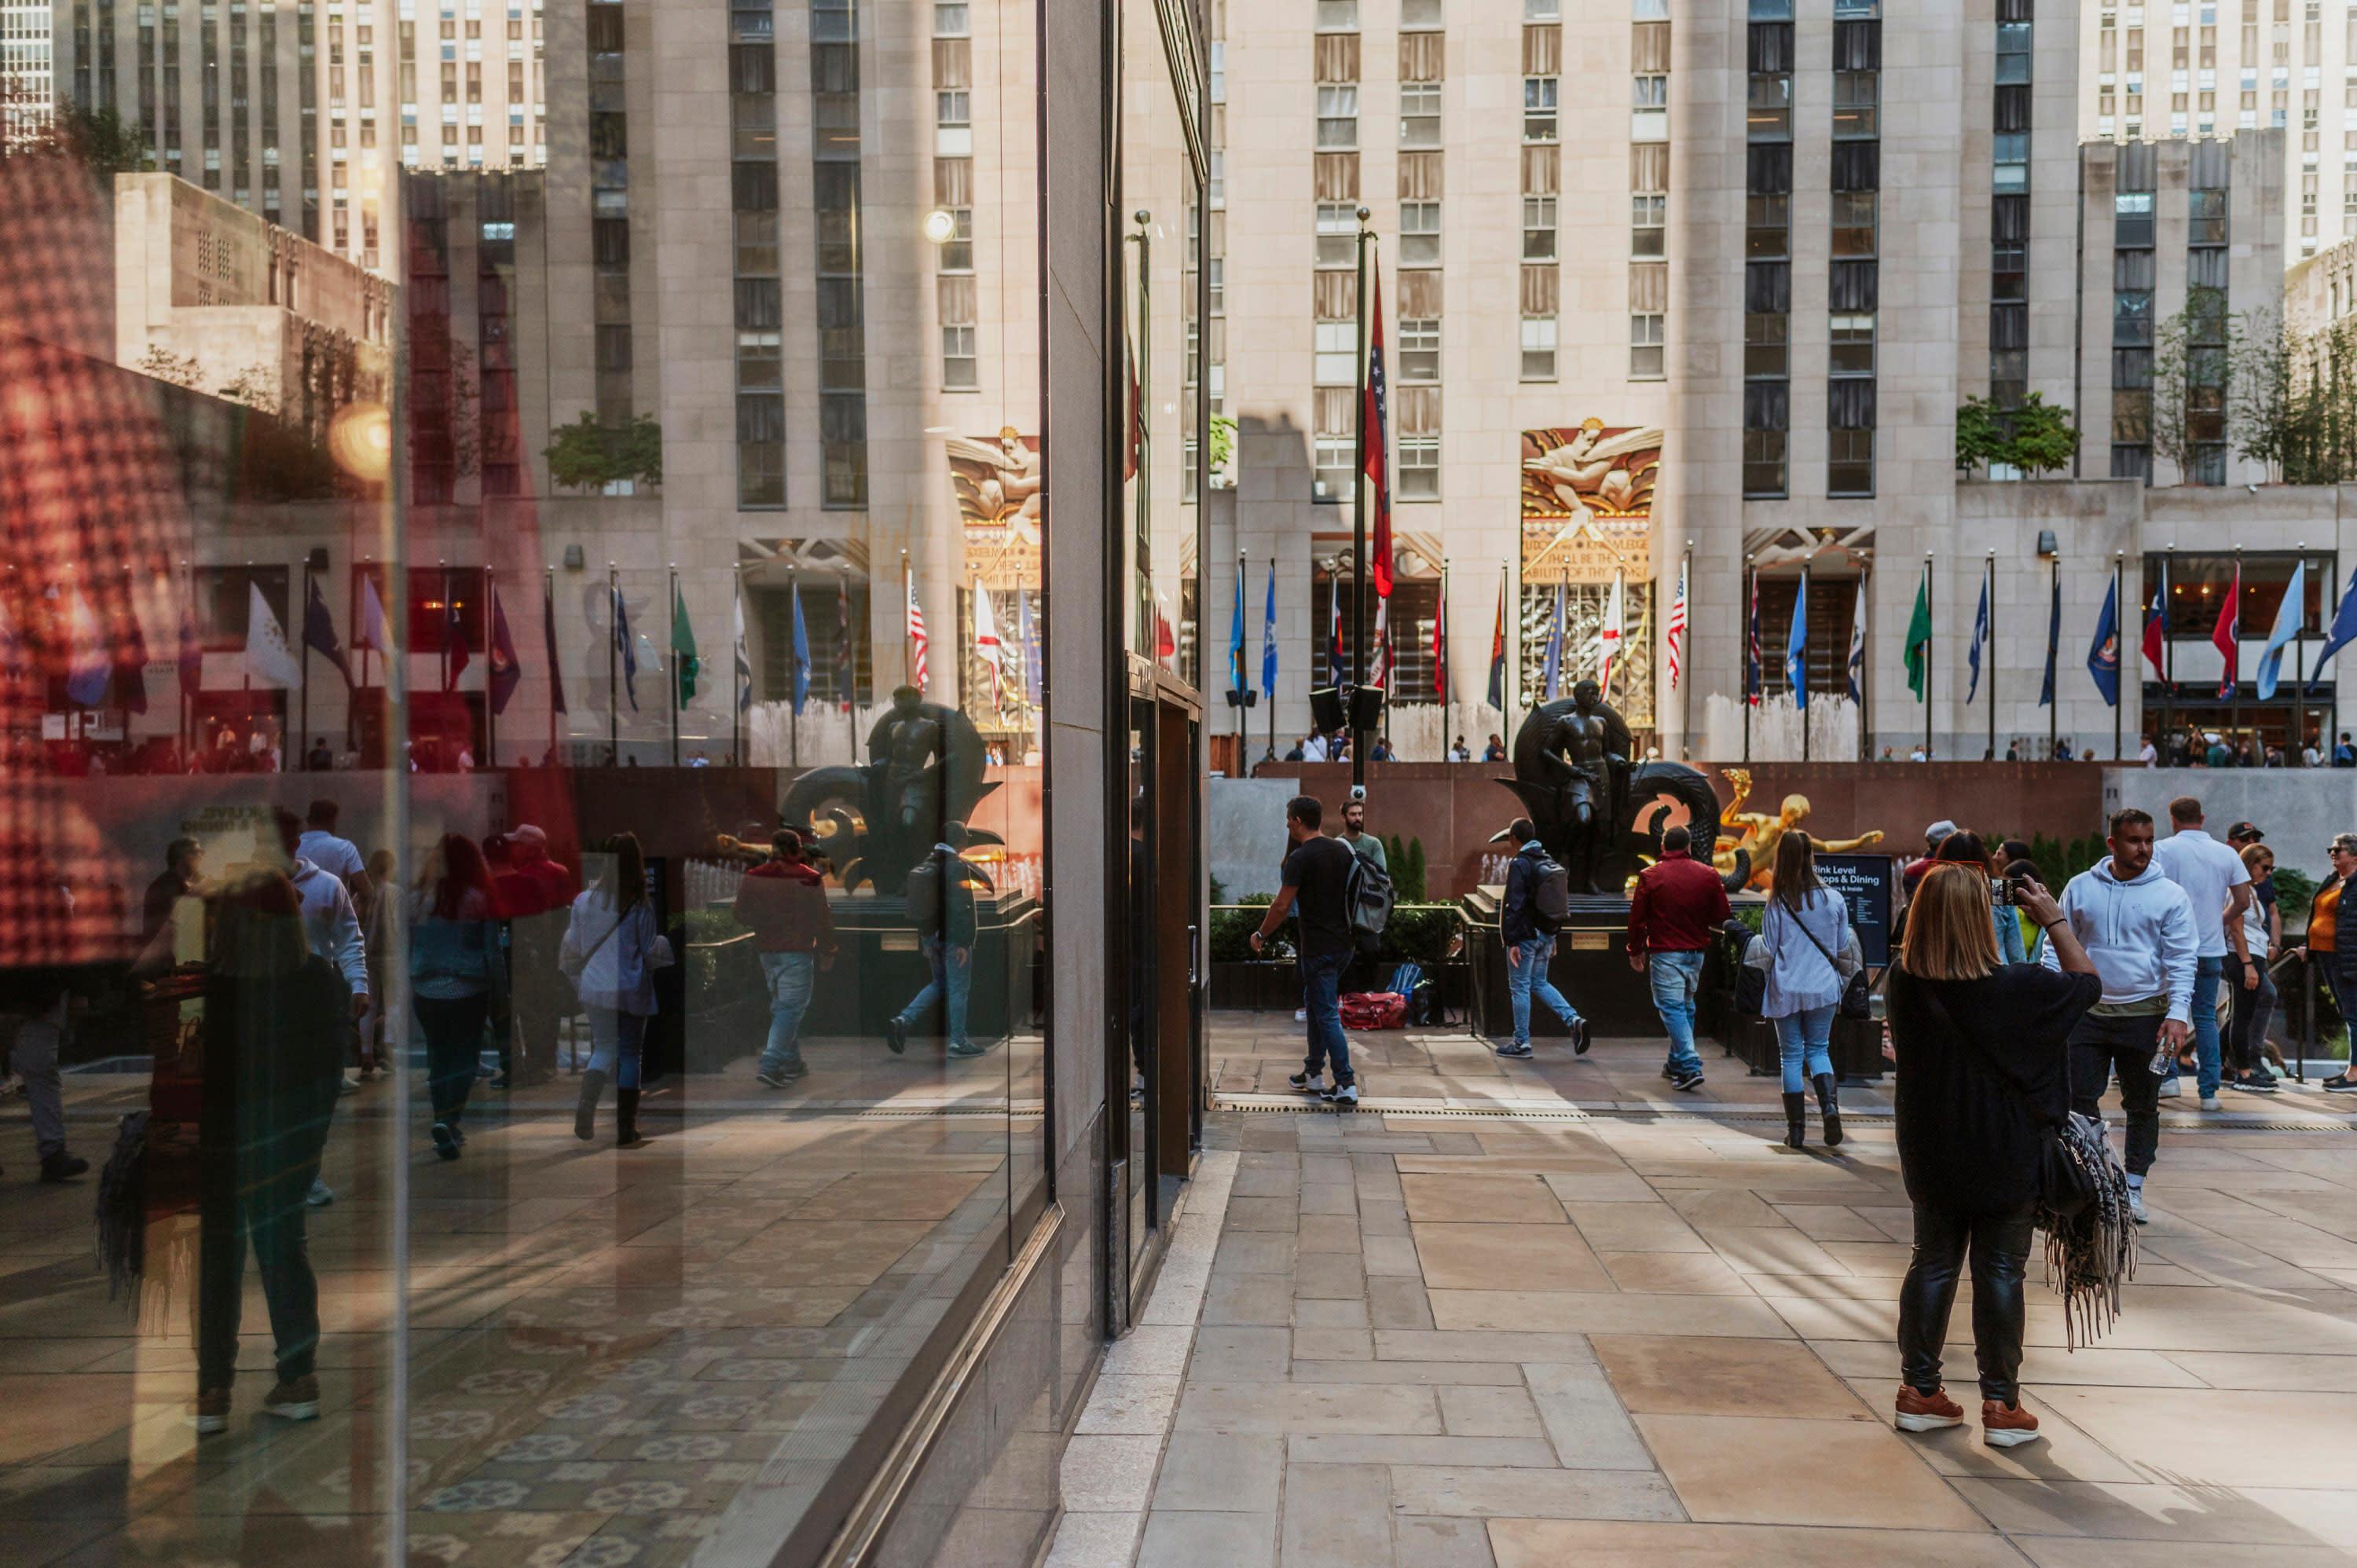 Rockefeller Center Reflected in storefront window in Midtown, Manhattan